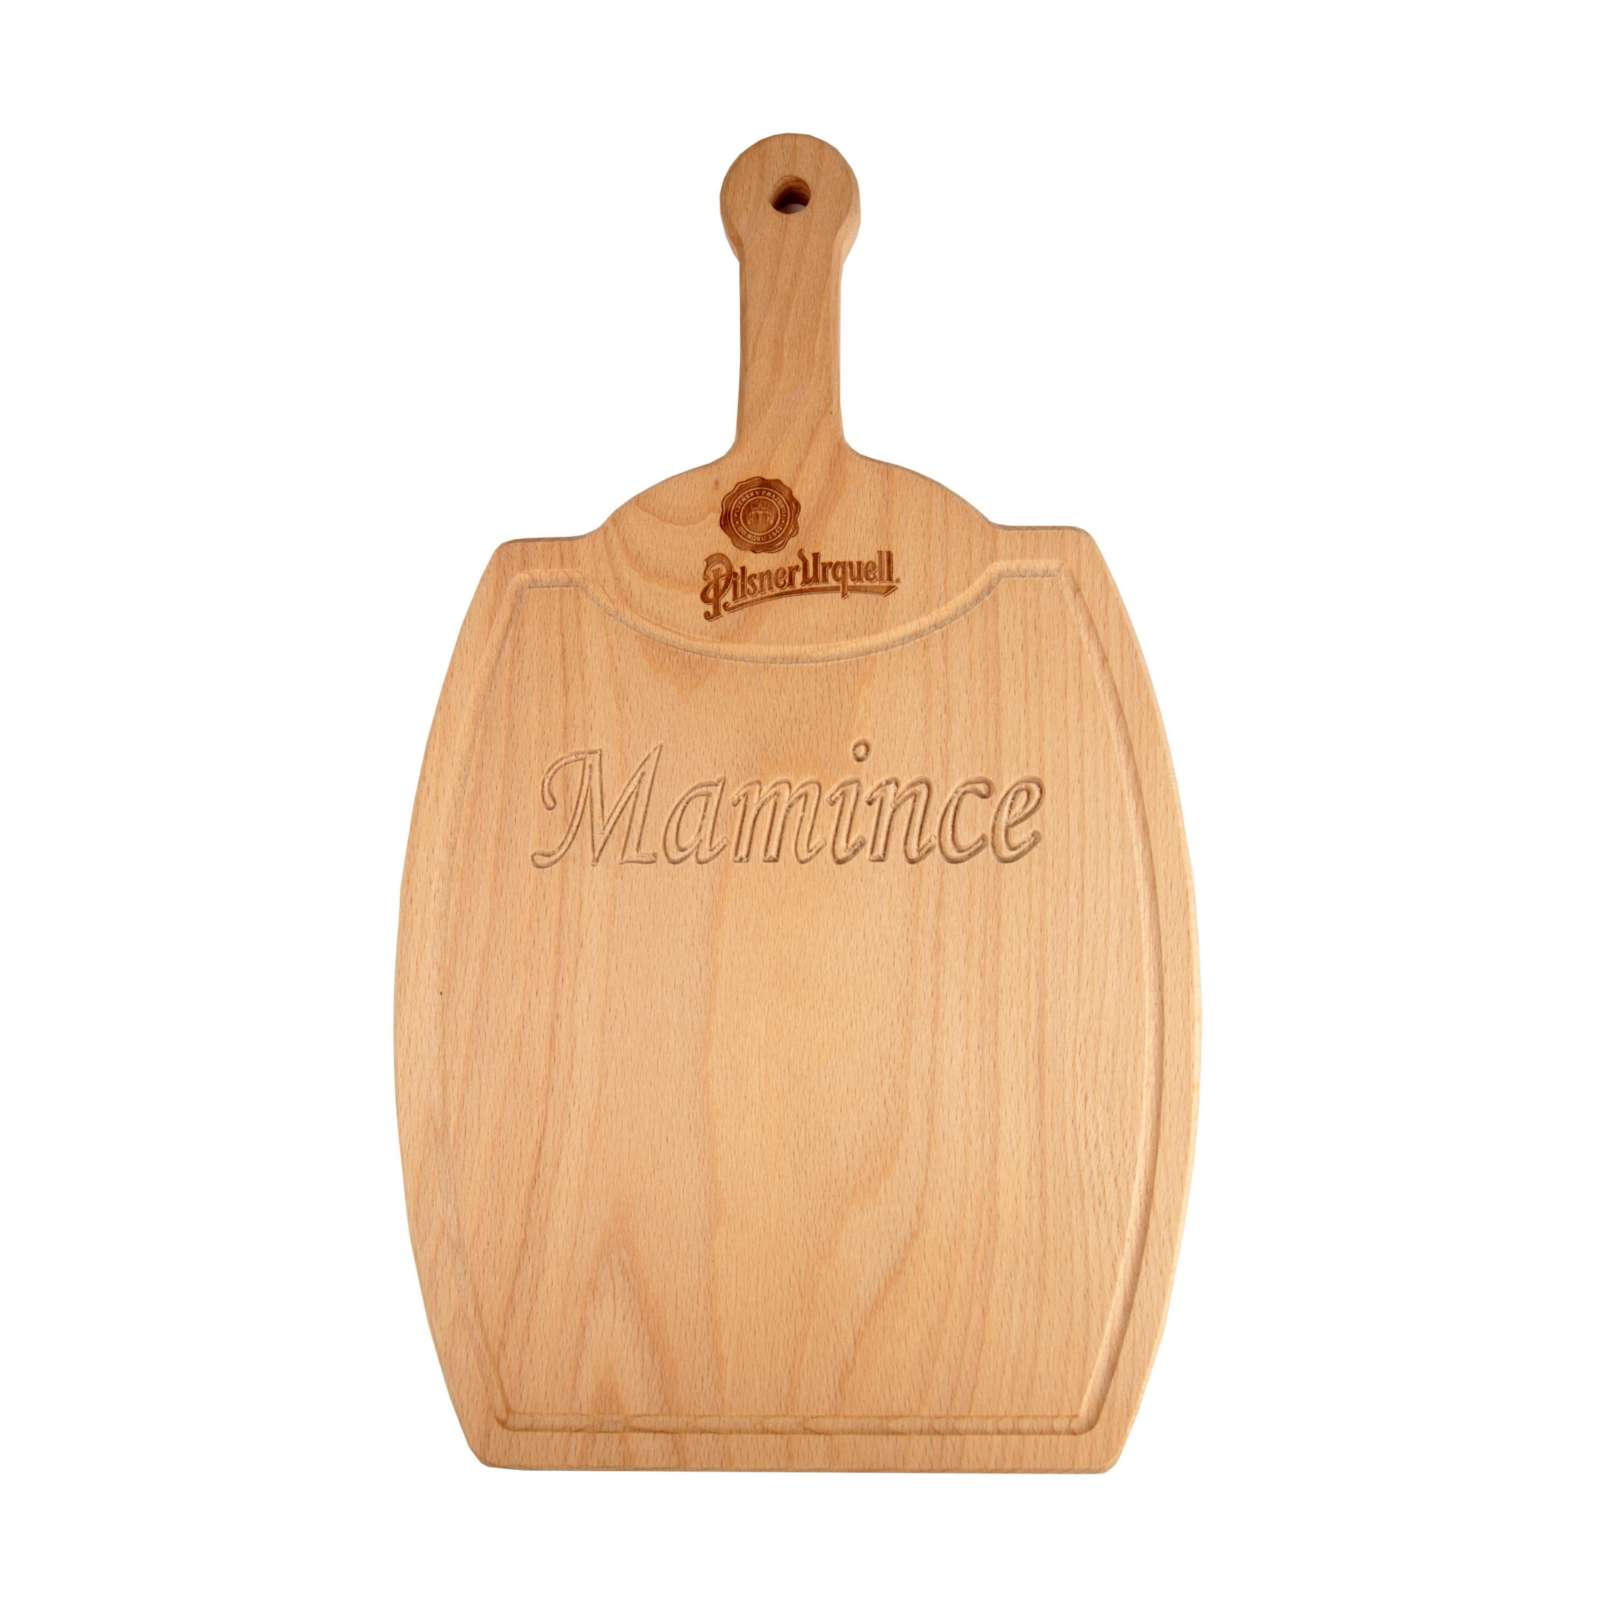 Pilsner Urquell wooden chopping board - barrel with inscription